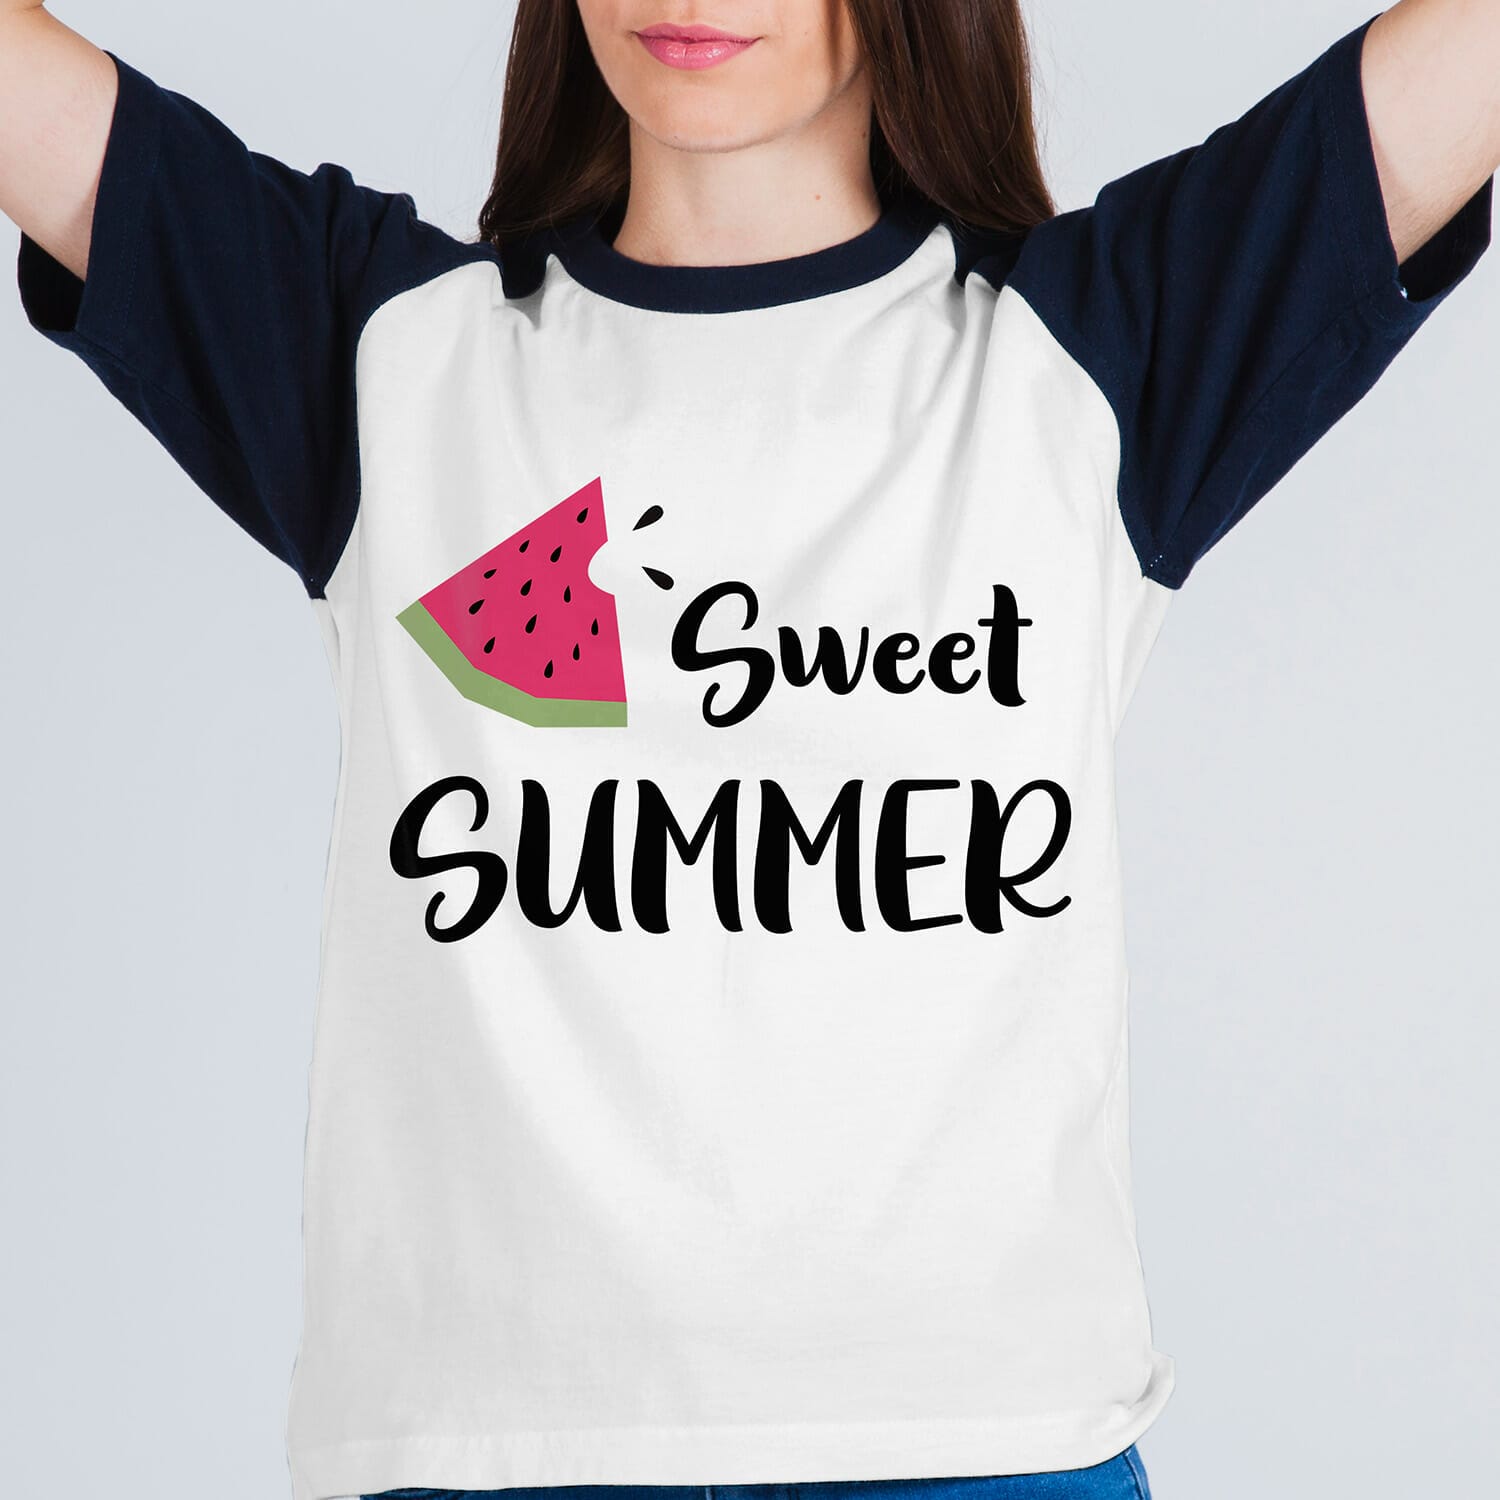 Sweet Summer with Watermelon T-shirt Design